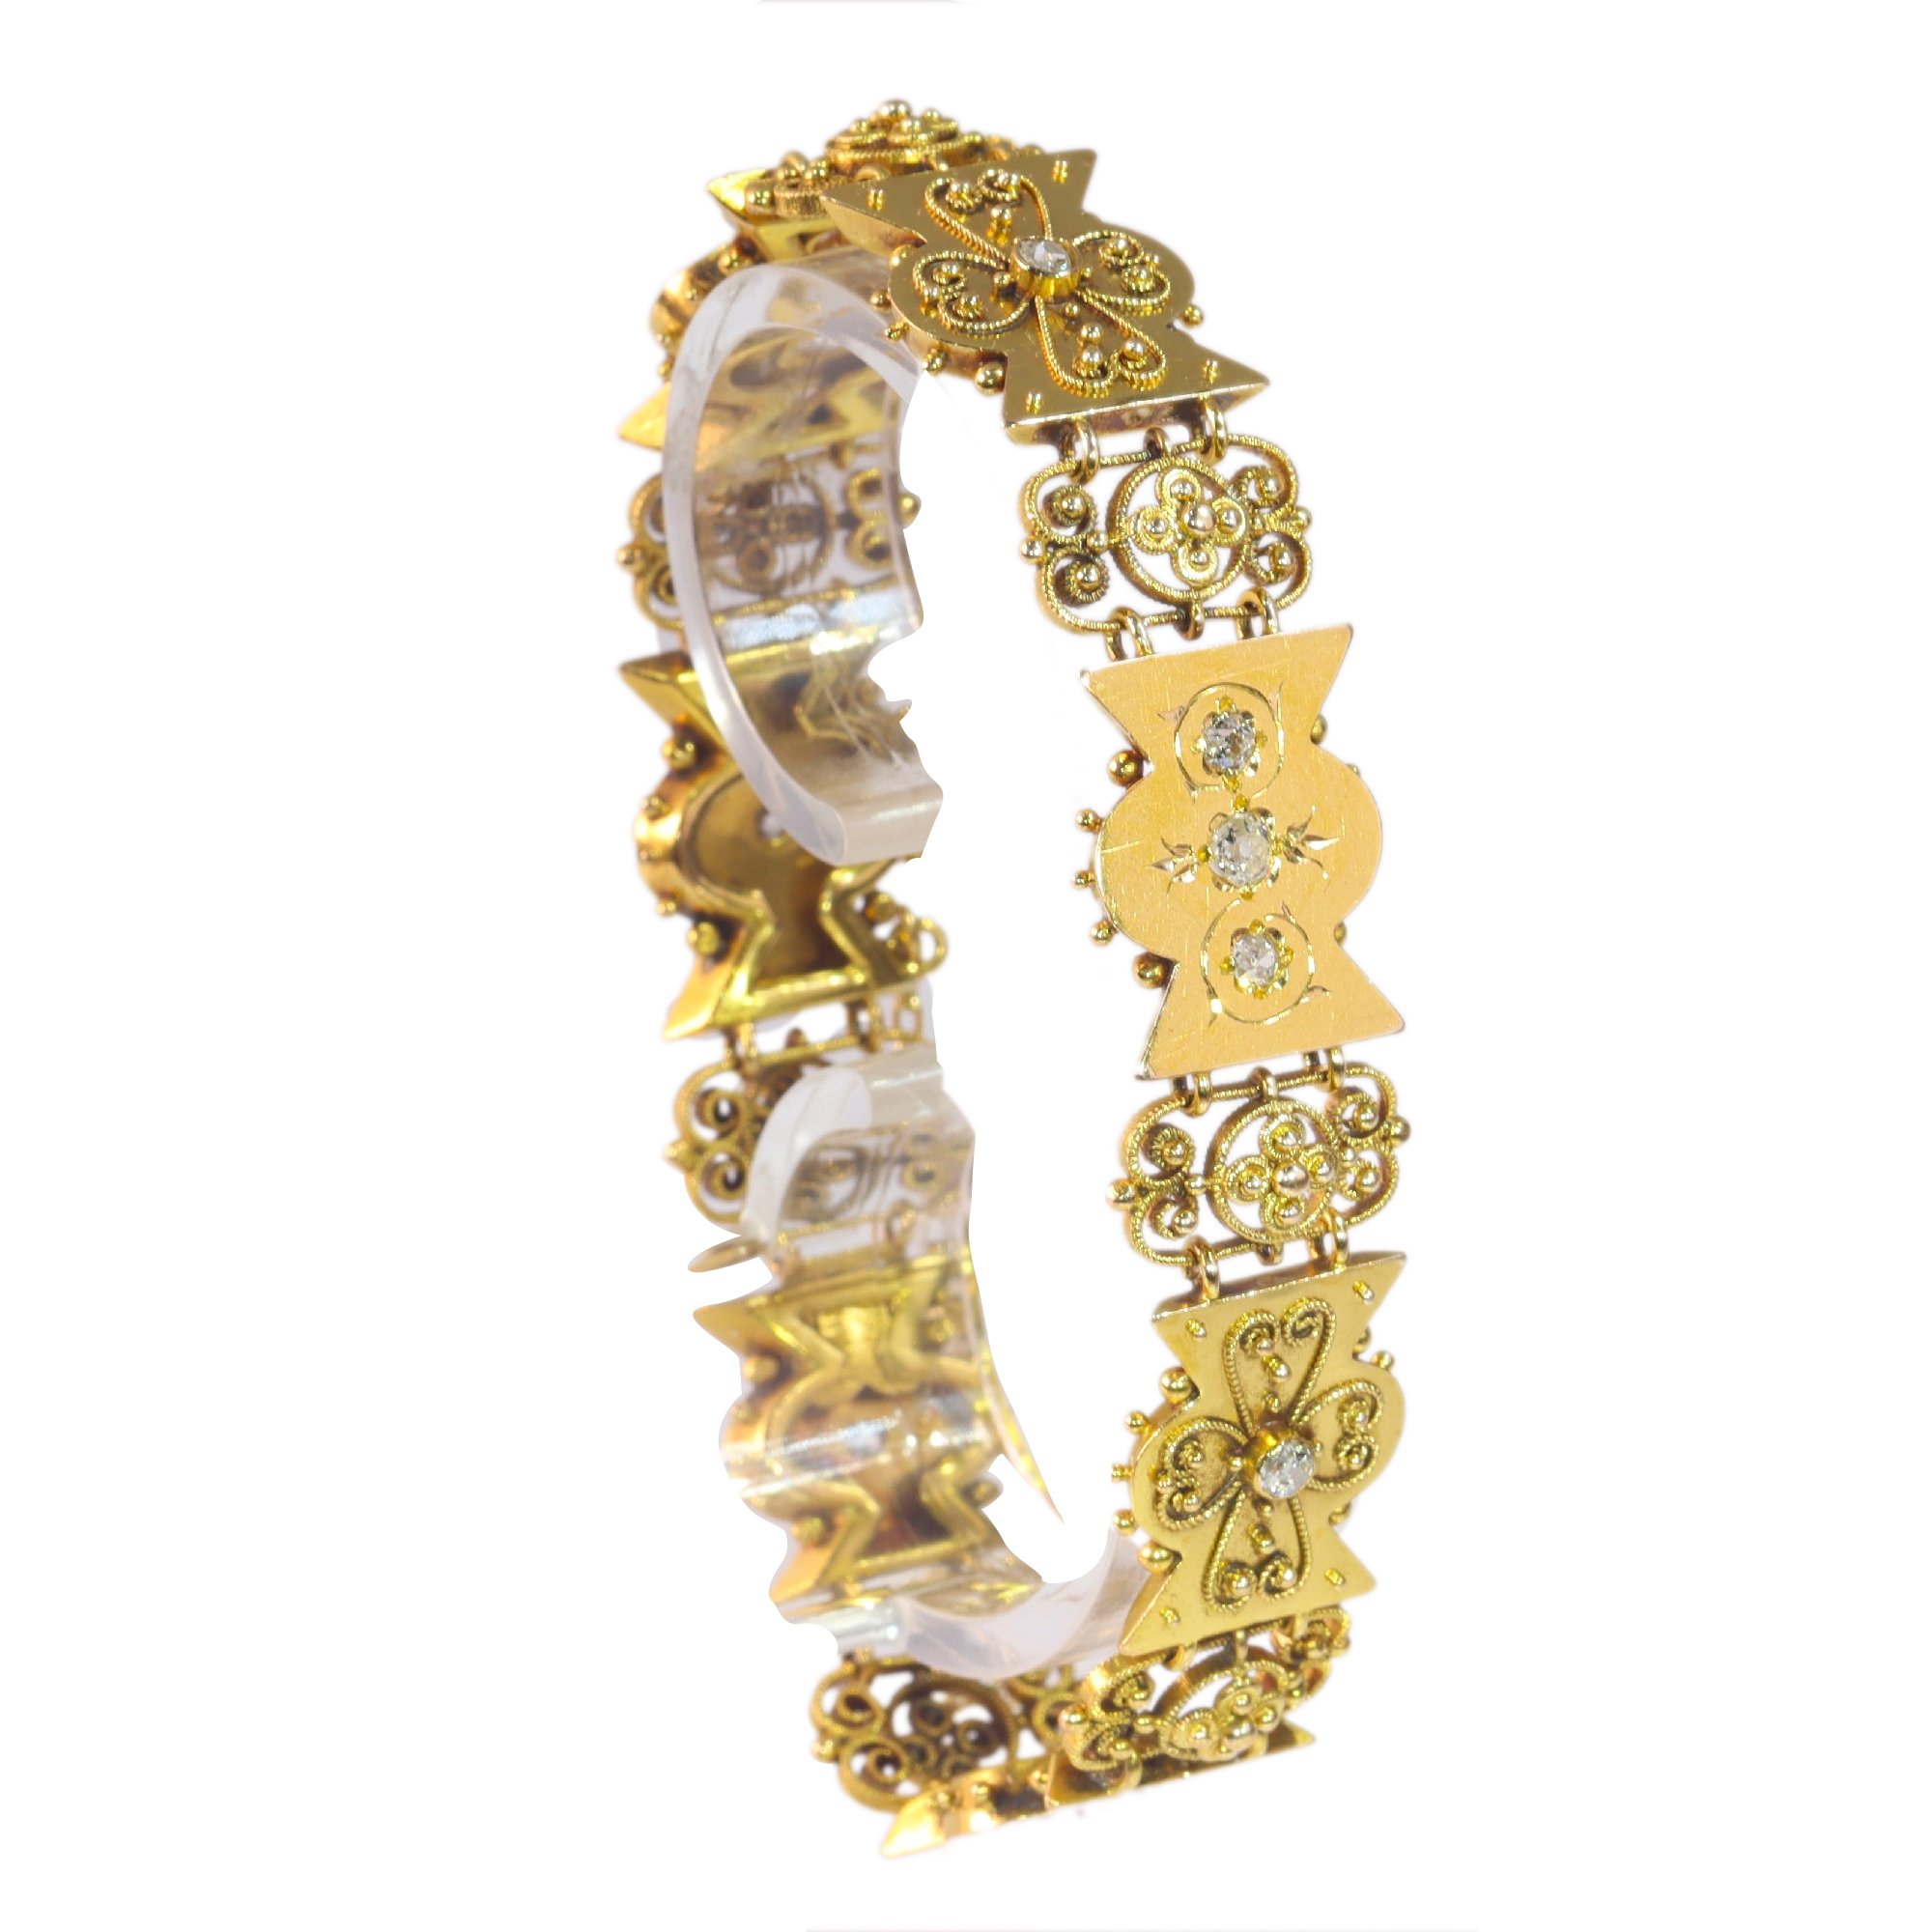 1880's Elegance: A Gold Bracelet with a Sparkling History